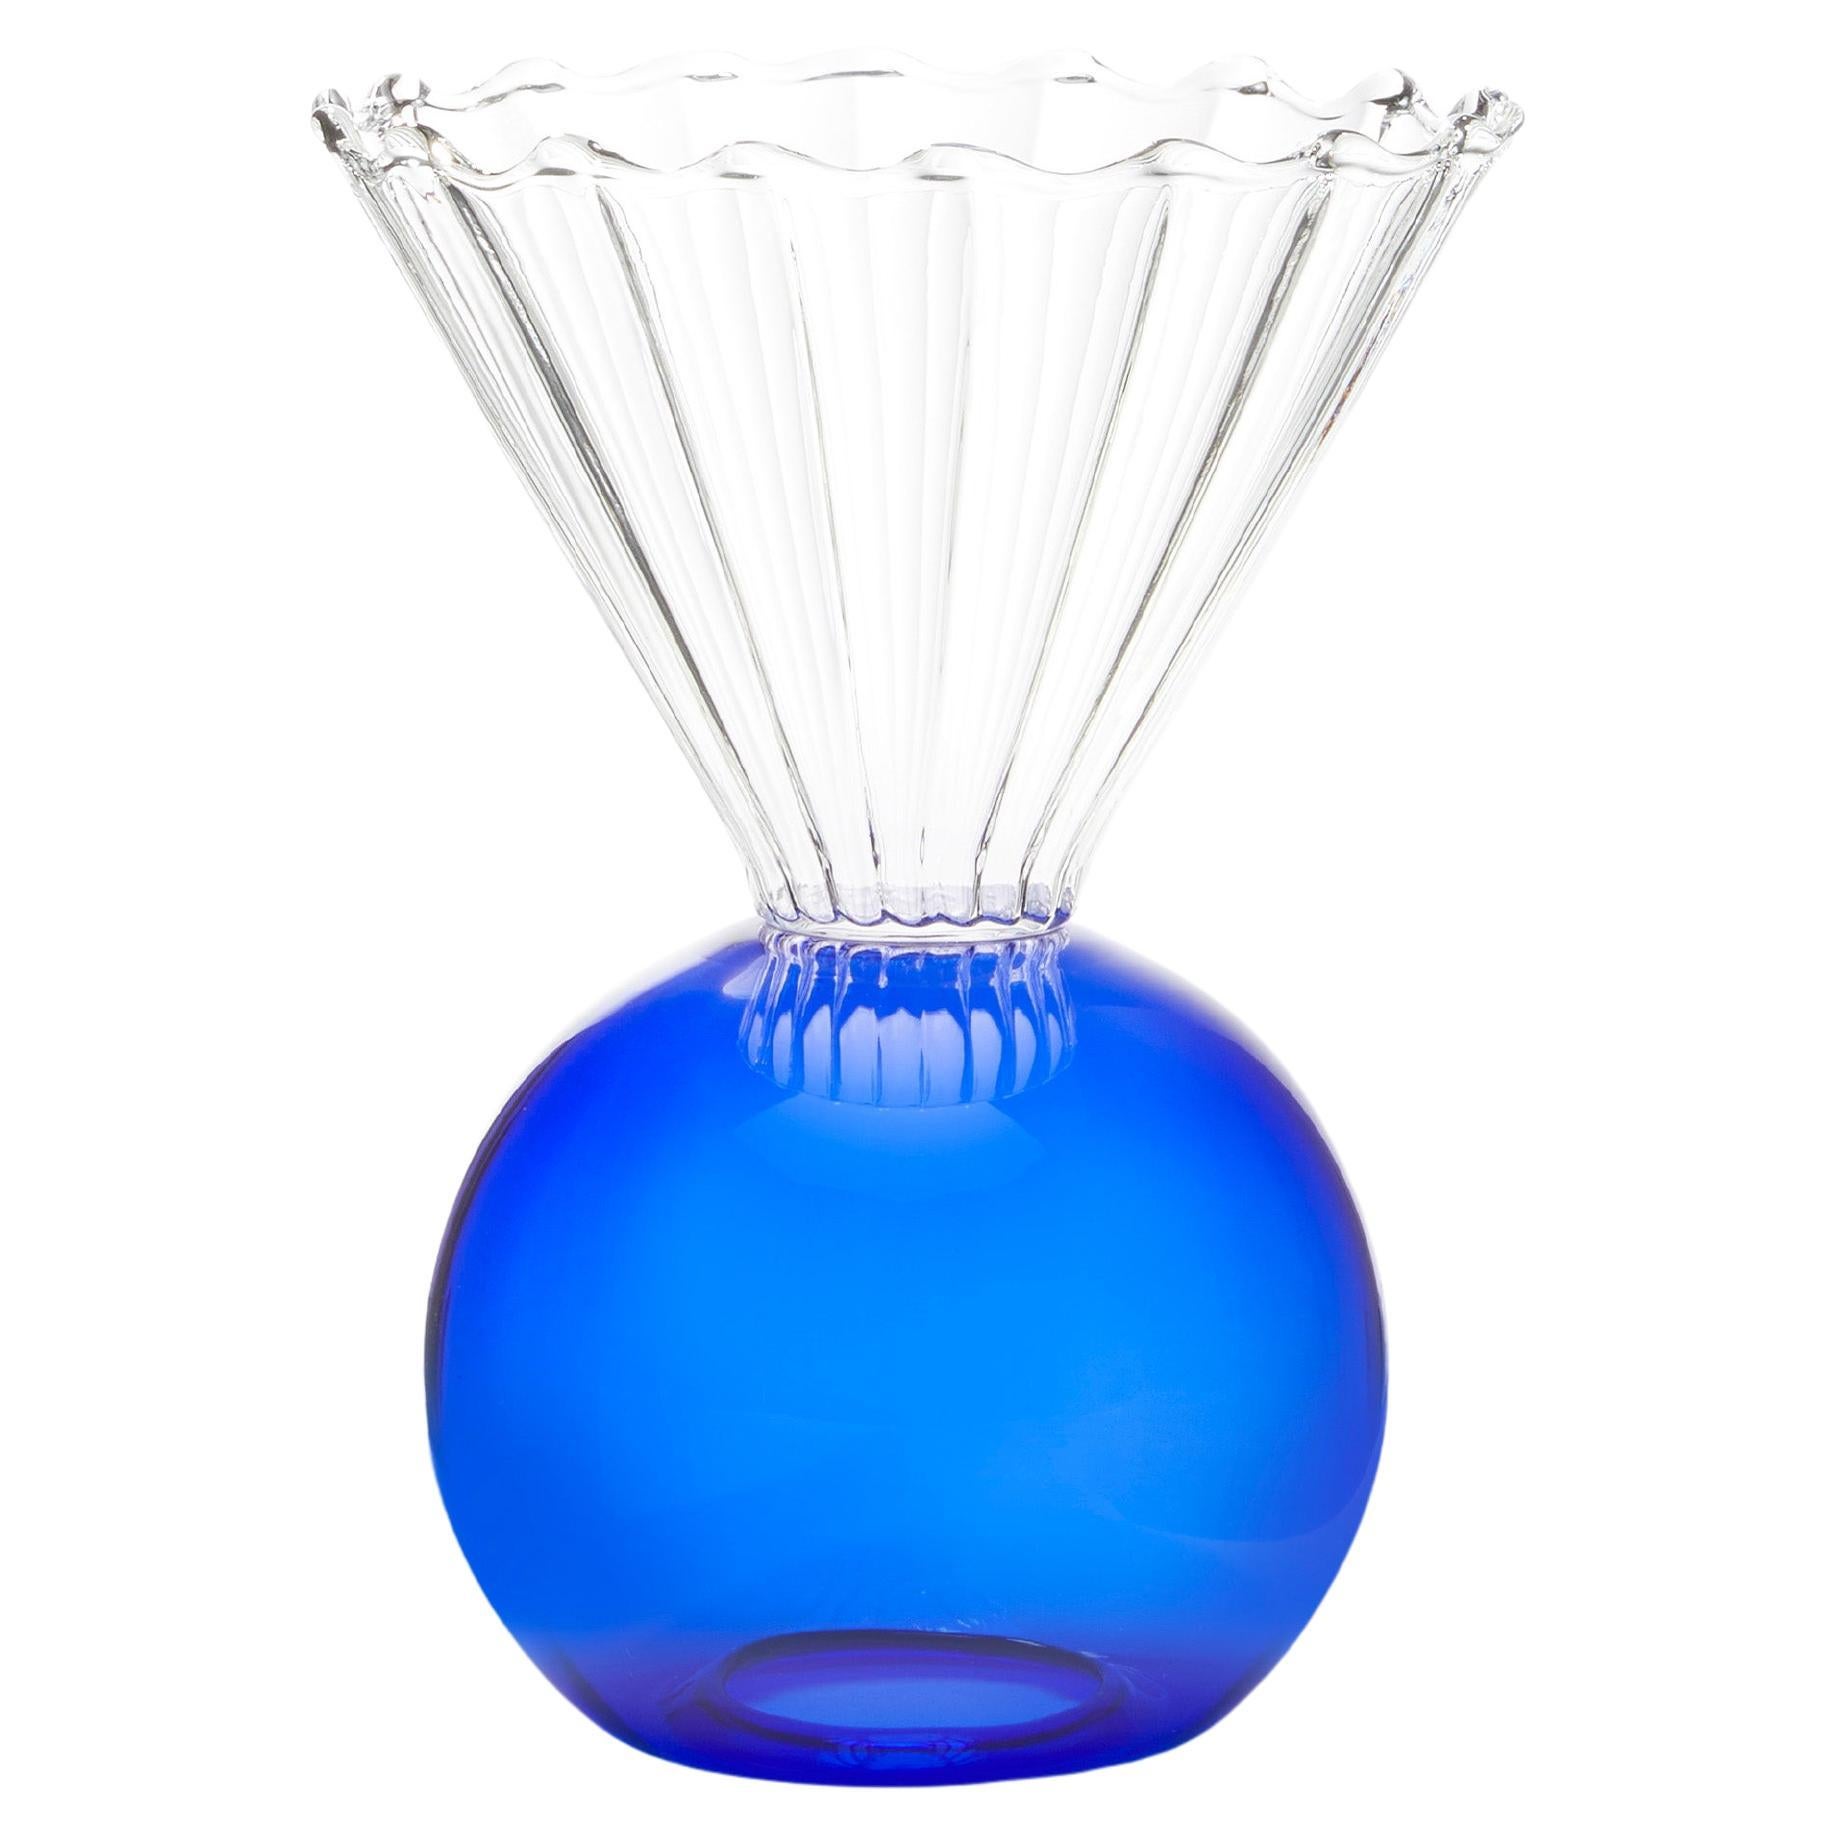 Bol contemporain en verre soufflé bleu par Natalia Criado Cône rond circulaire